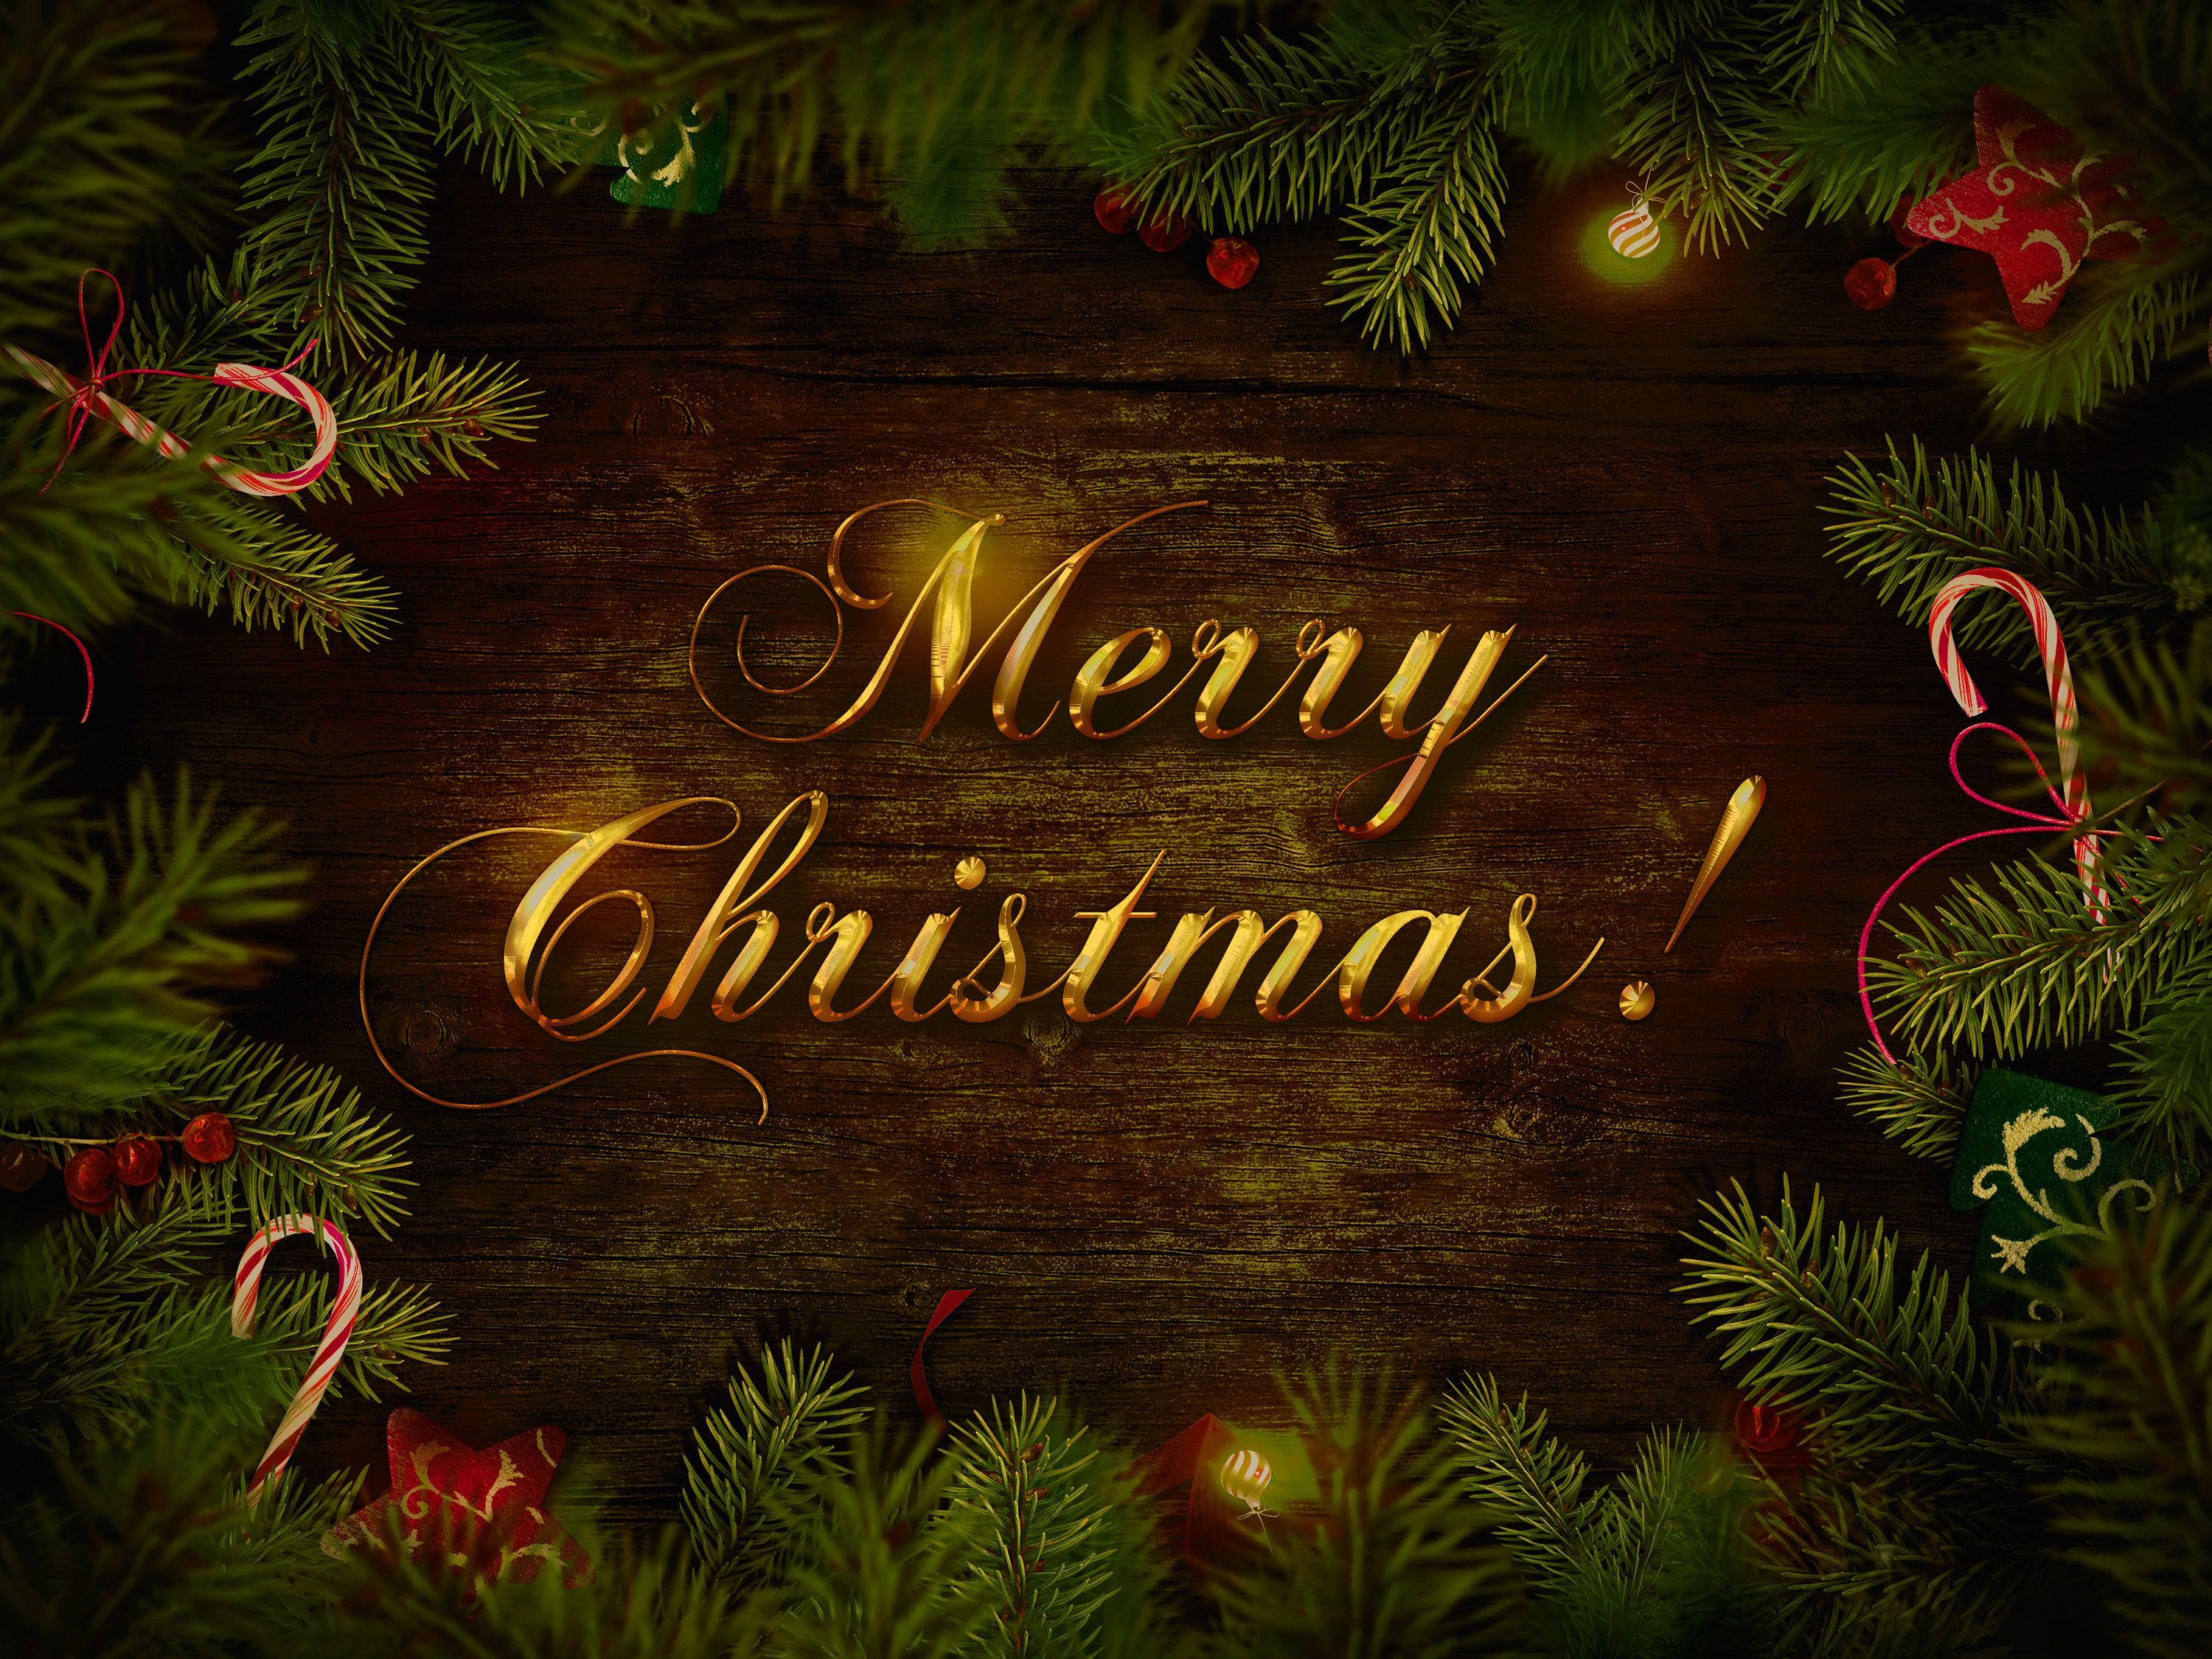 Merry Christmas Dark Background. Merry christmas wallpaper, Merry christmas picture, Christmas desktop